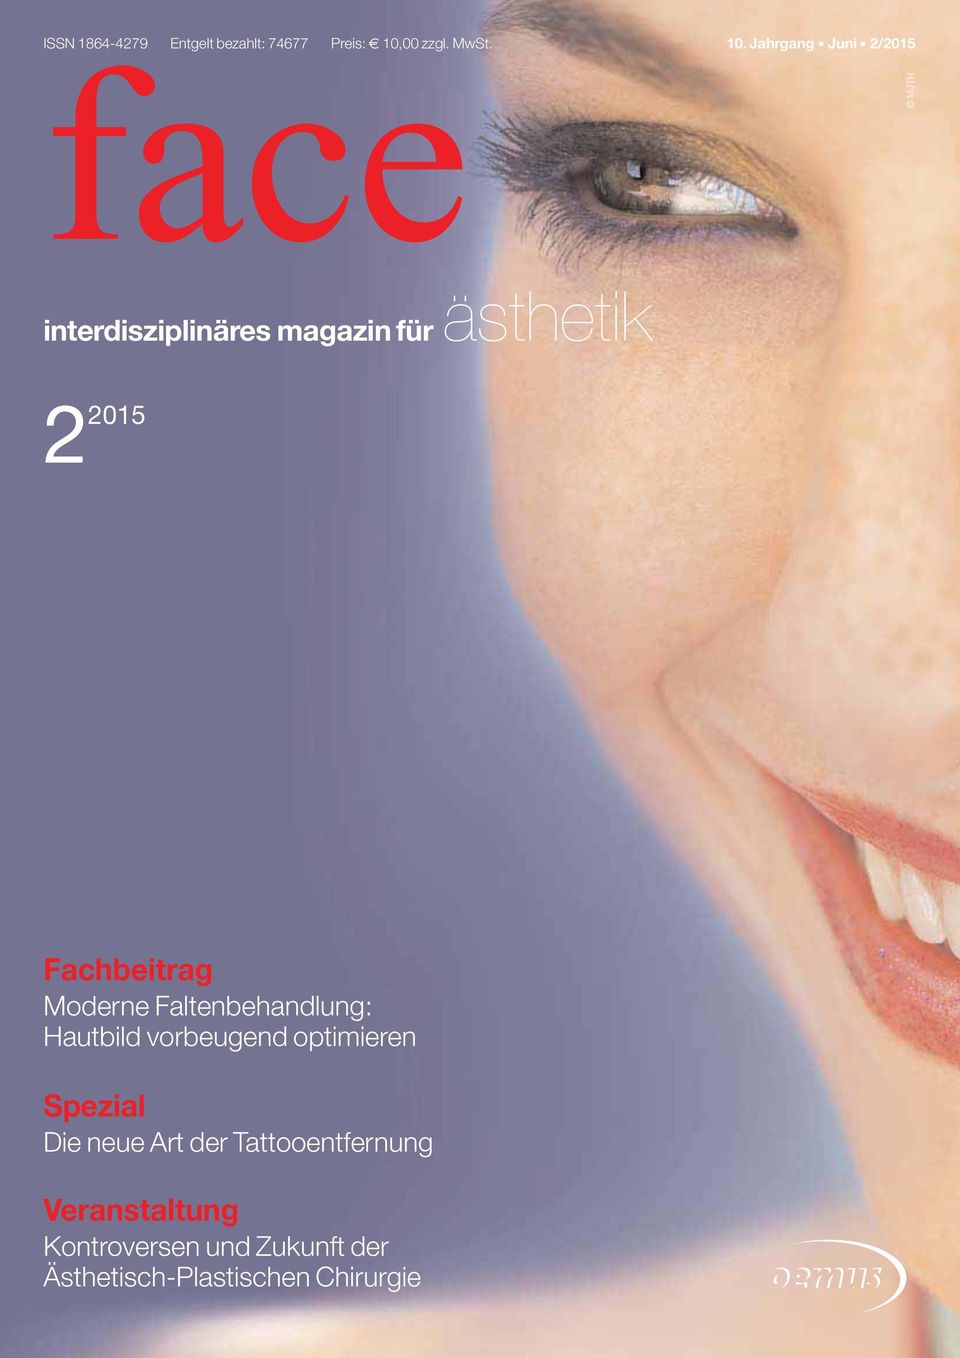 Jahrgang Juni 2/2015 interdisziplinäres magazin für ästhetik Fachbeitrag